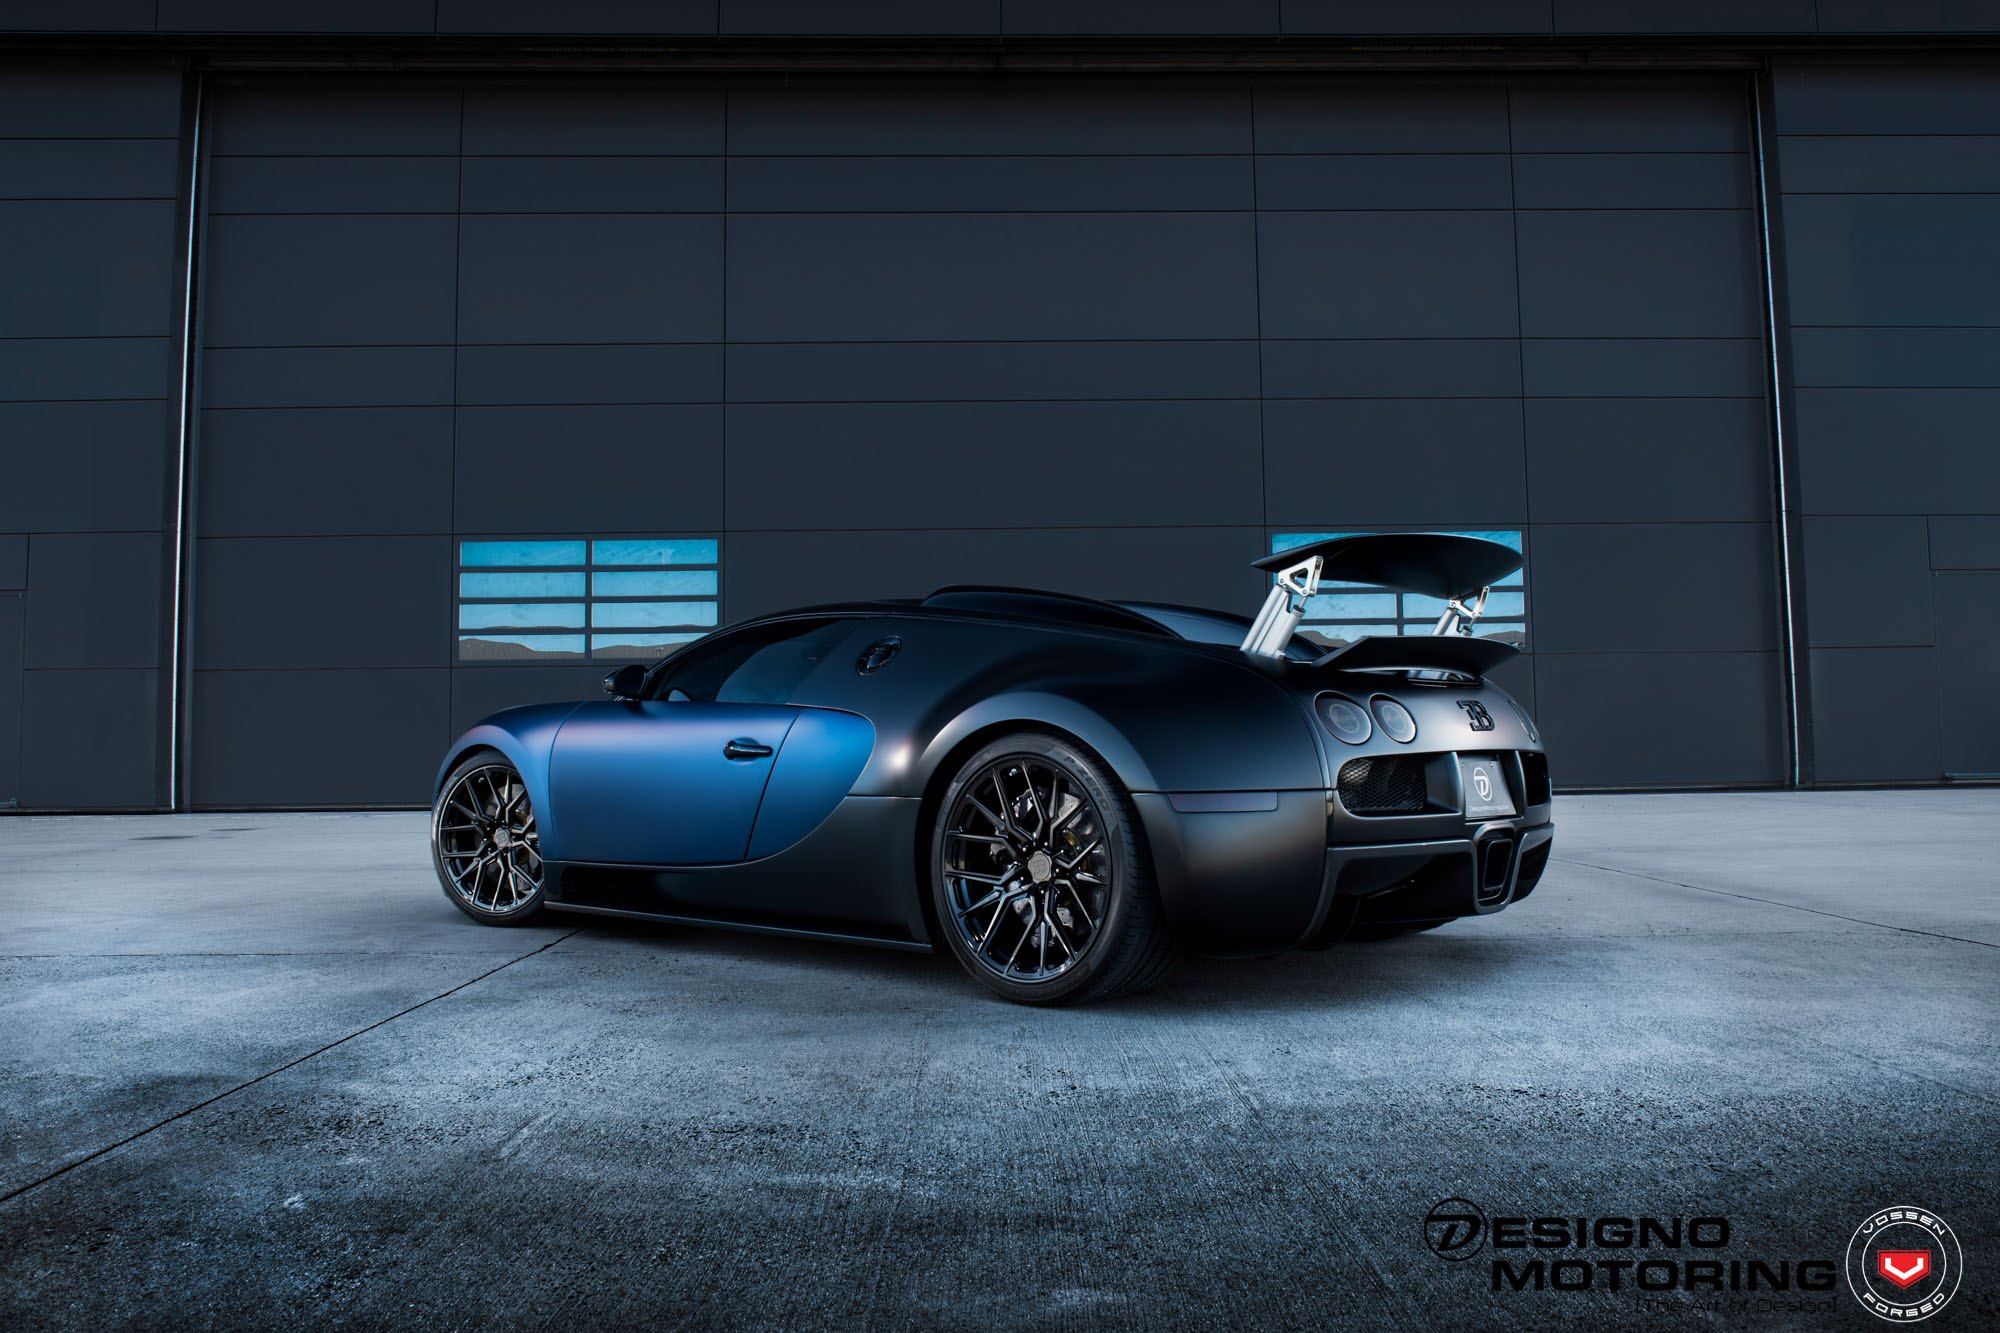 Dark Blue Bugatti Veyron with Large Wing Spoiler - Photo by Vossen